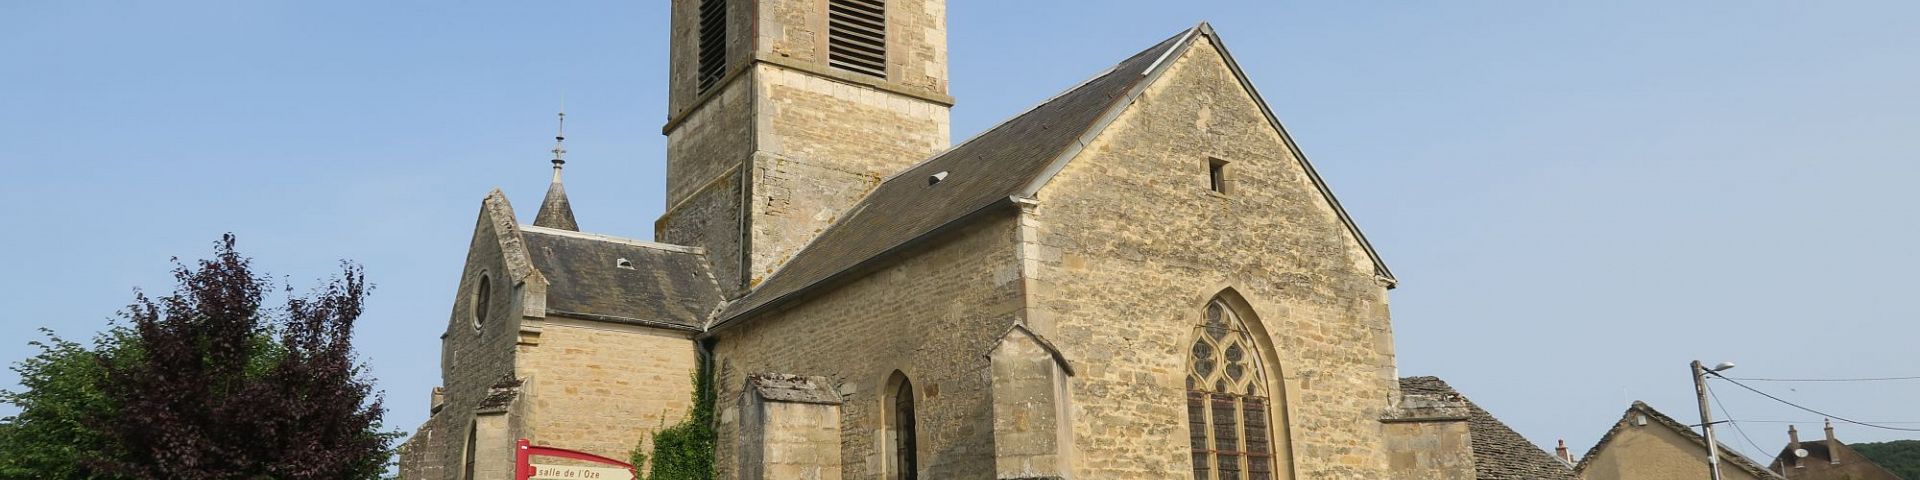 Turcey - Eglise Saint-Julien (21)